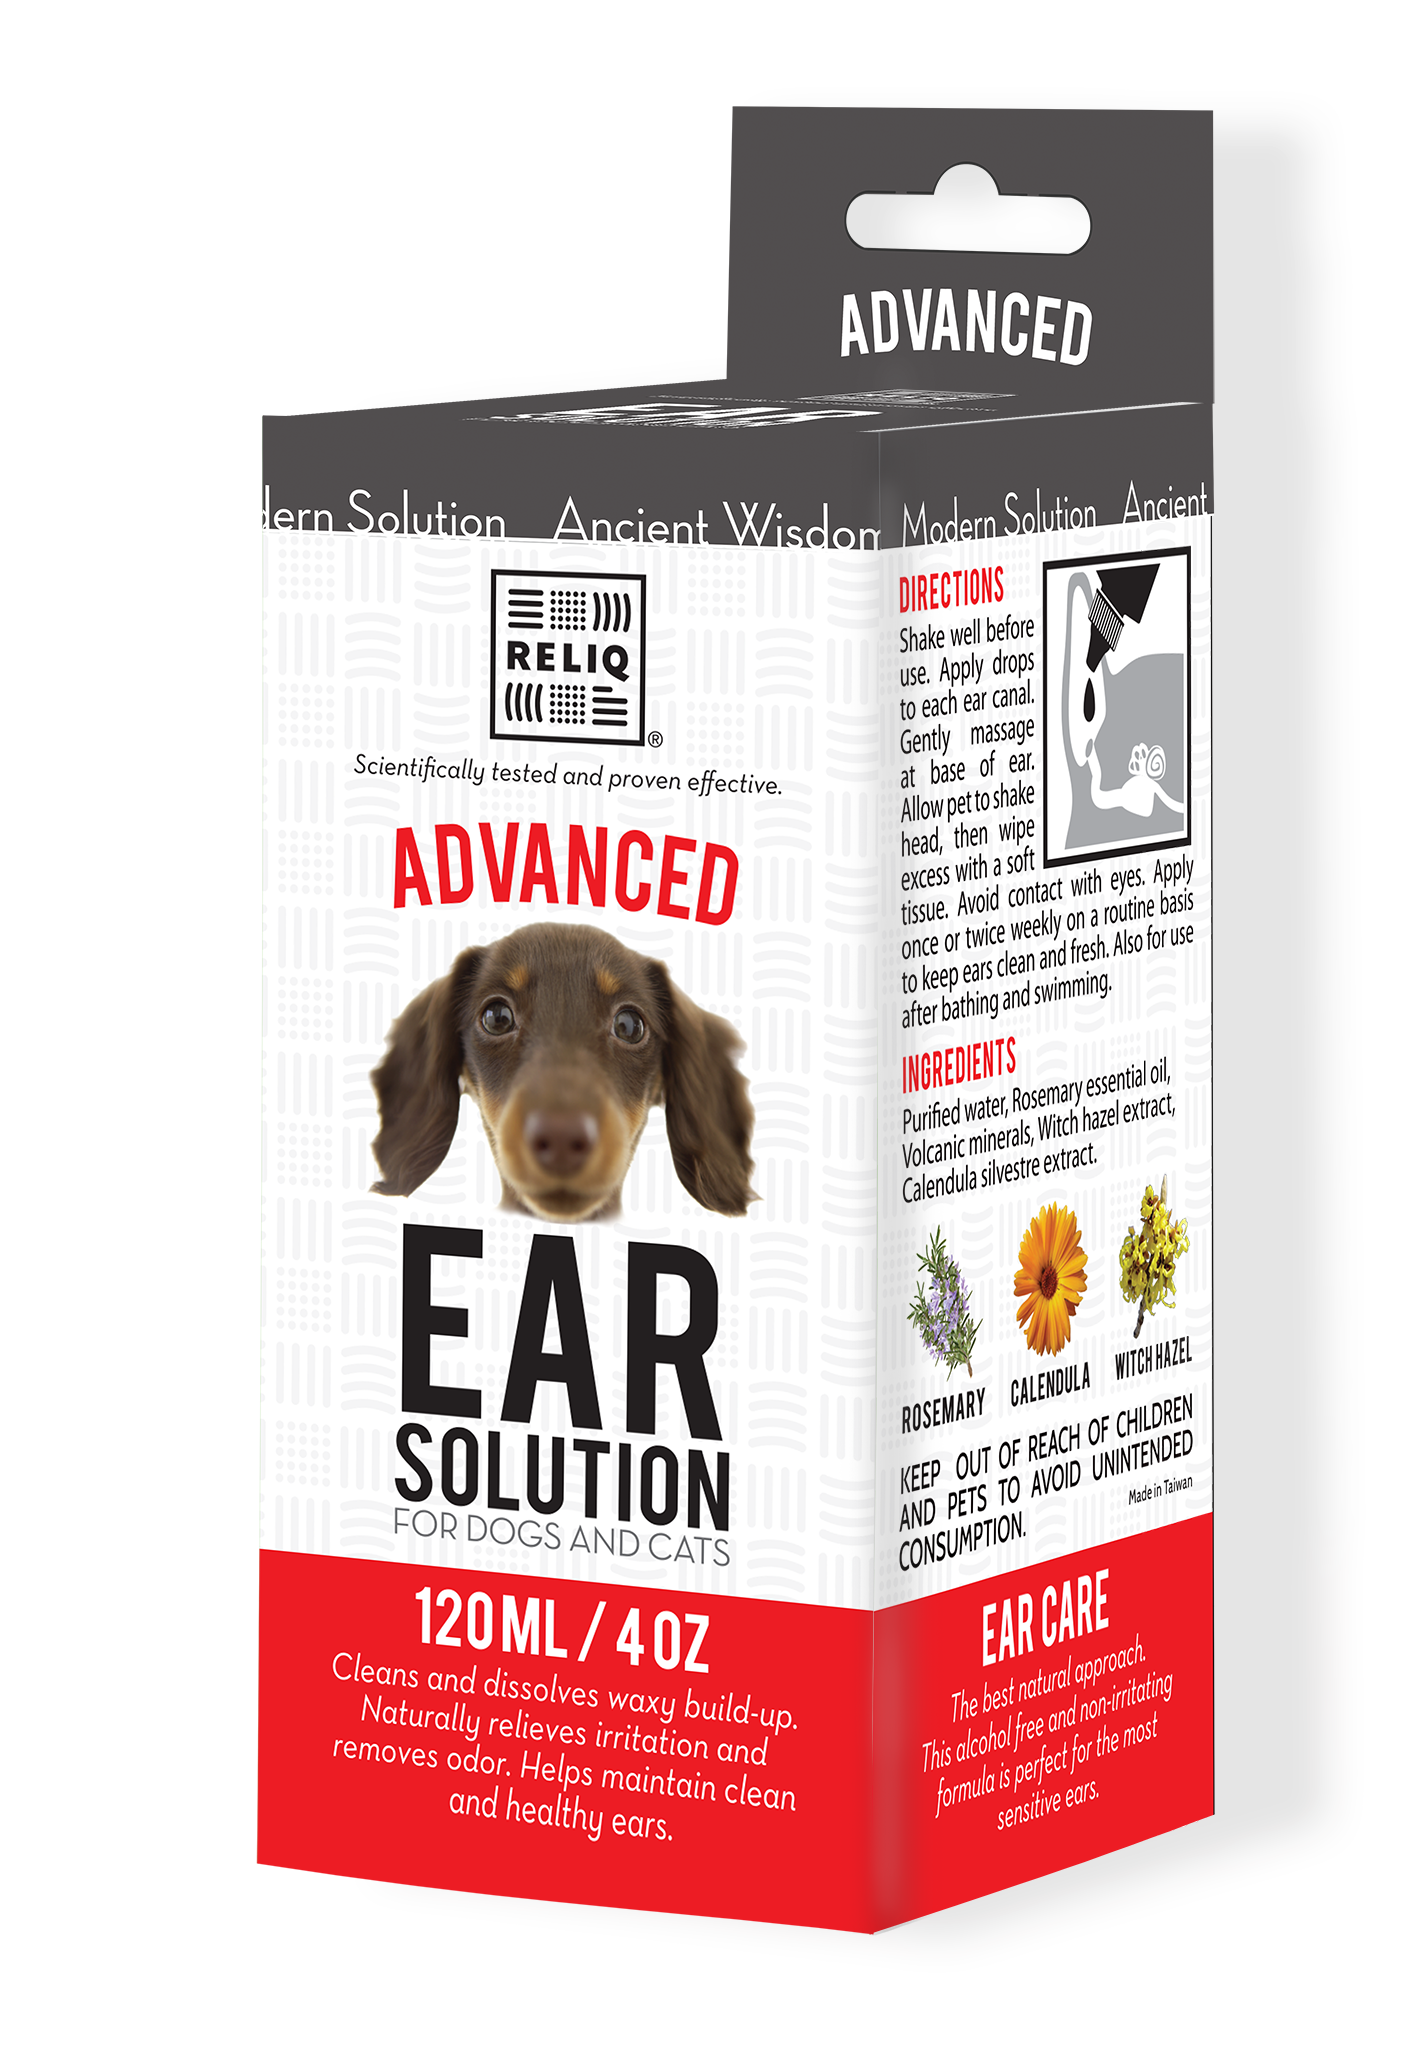 Ear Solution